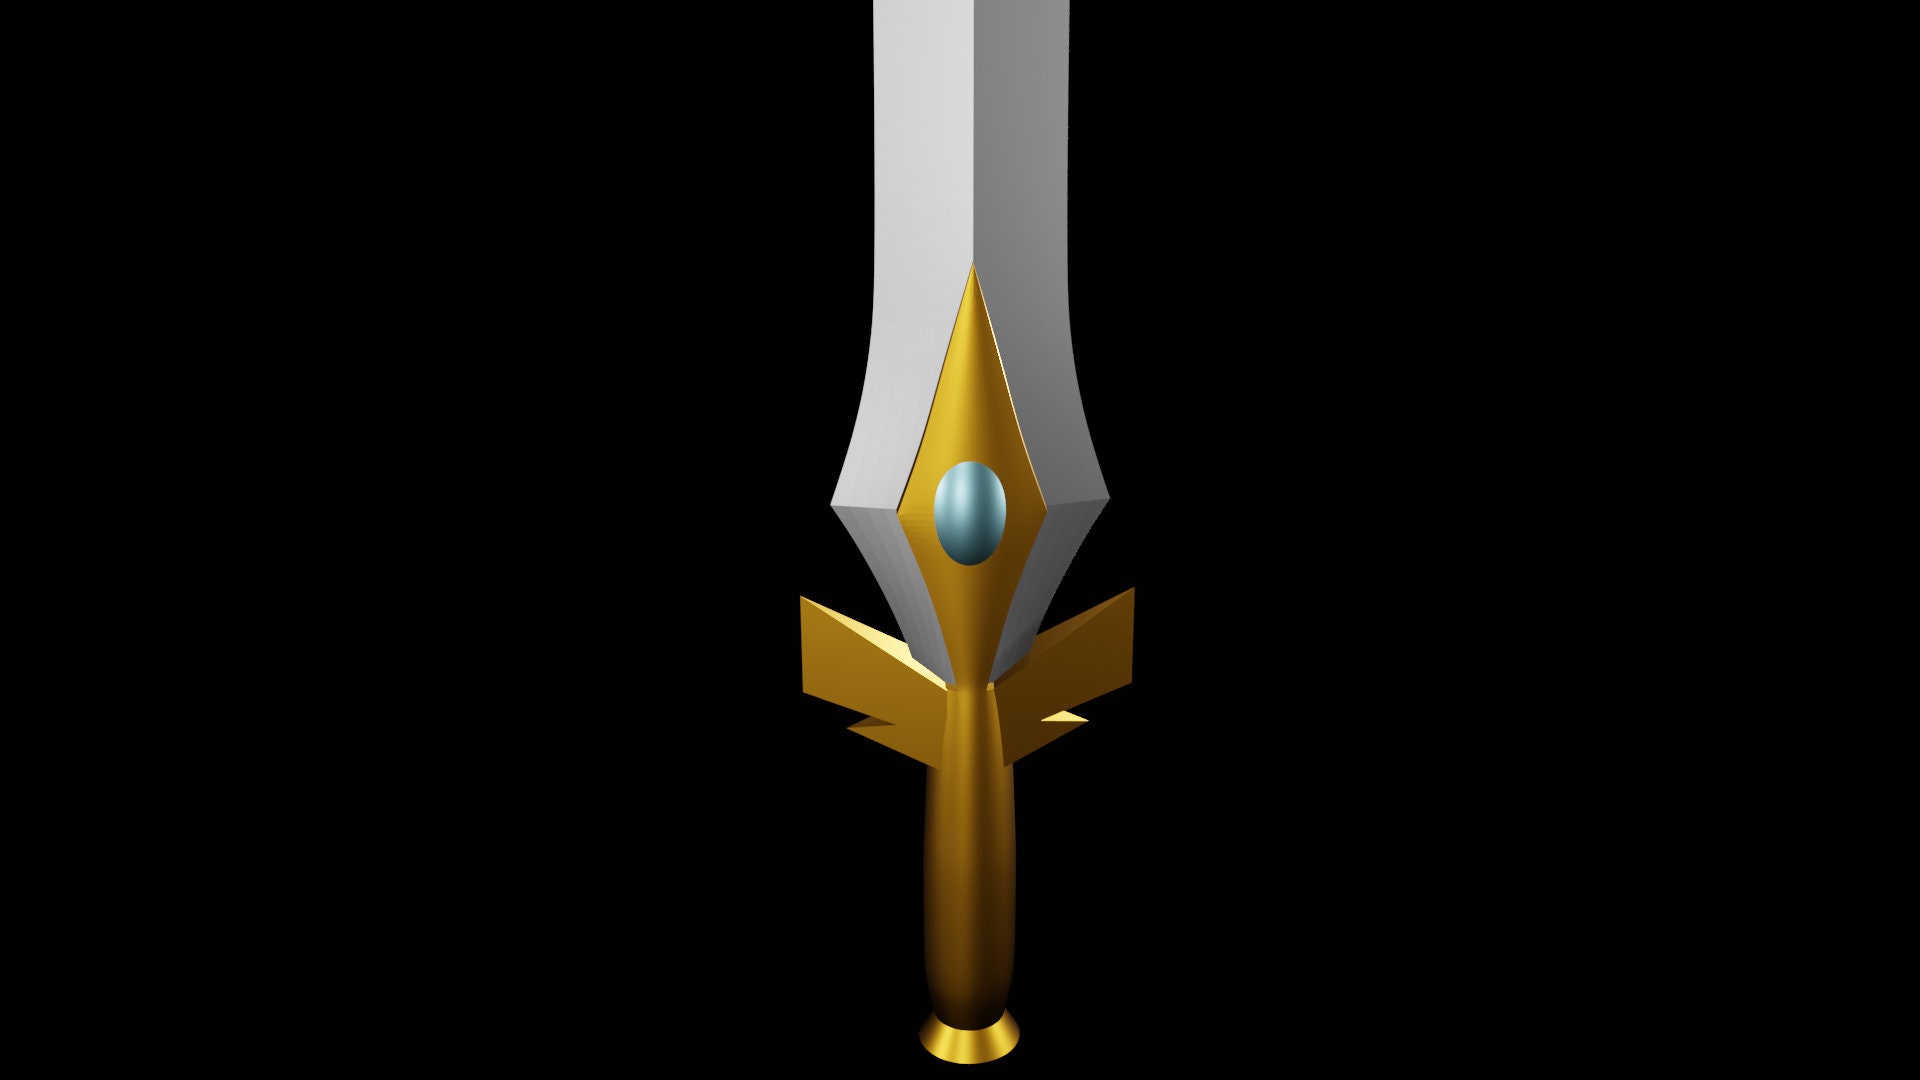 She-ra Cosplay 3D Printed Sword One 